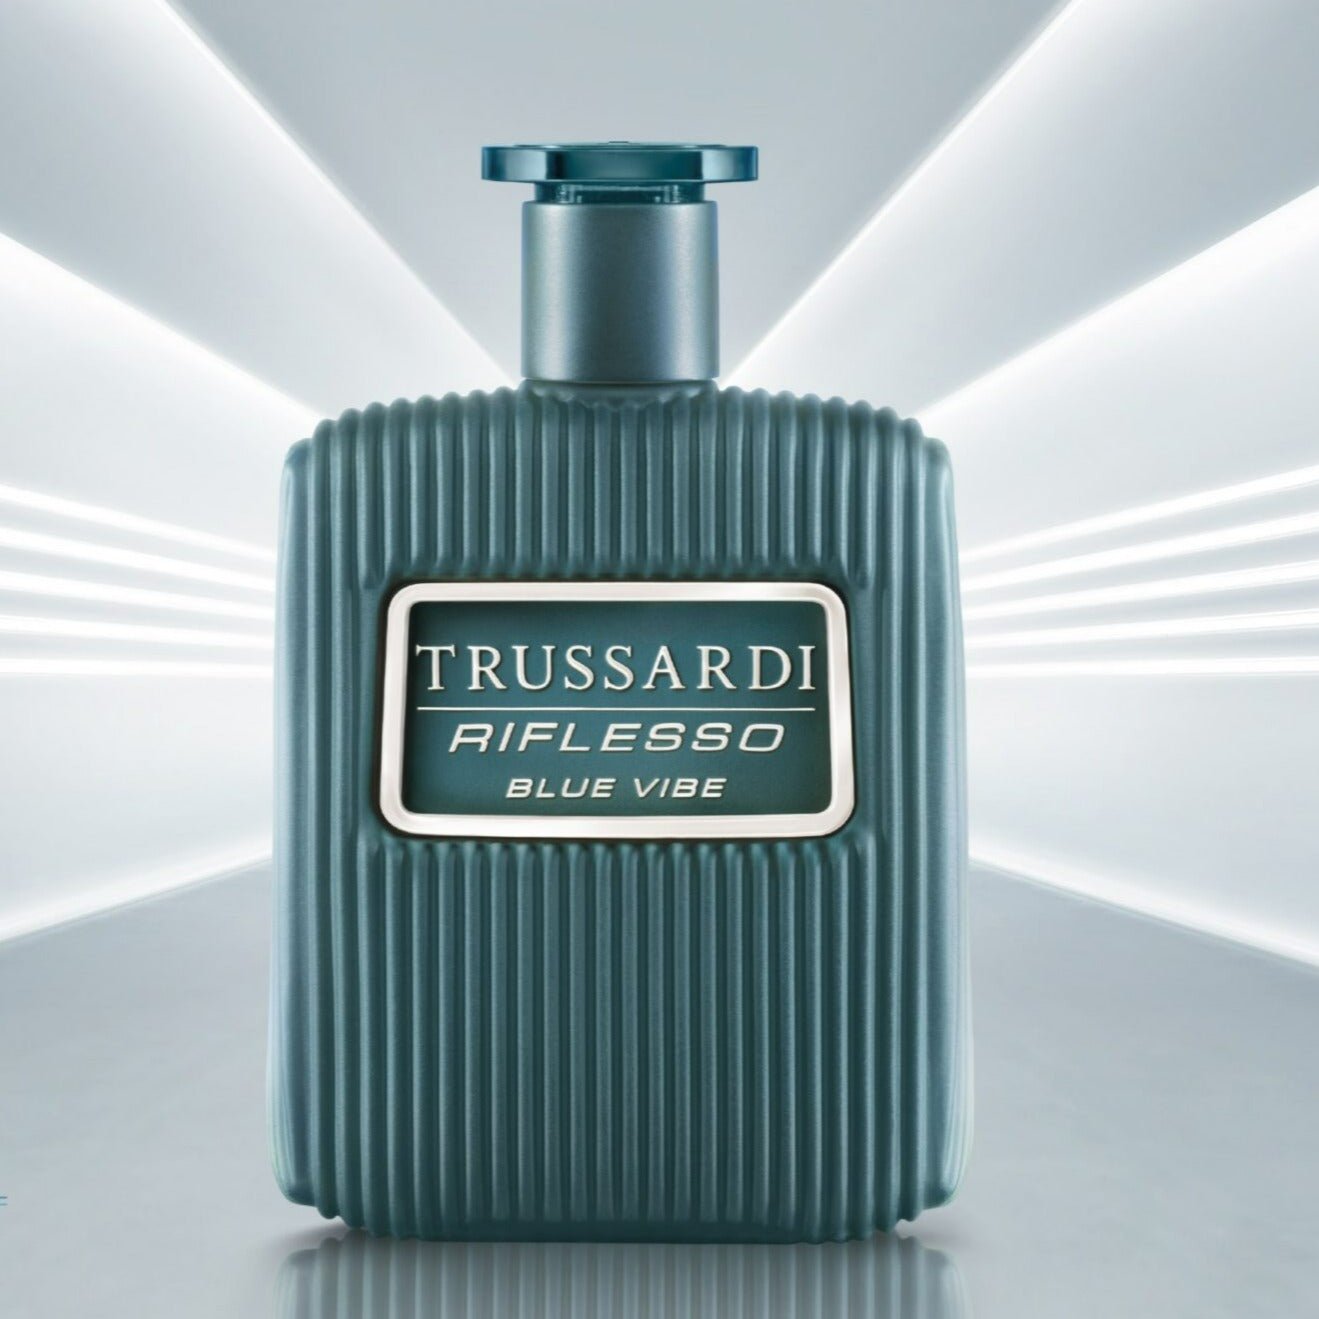 Trussardi Riflesso Blue Vibe Limited Edition EDT | My Perfume Shop Australia